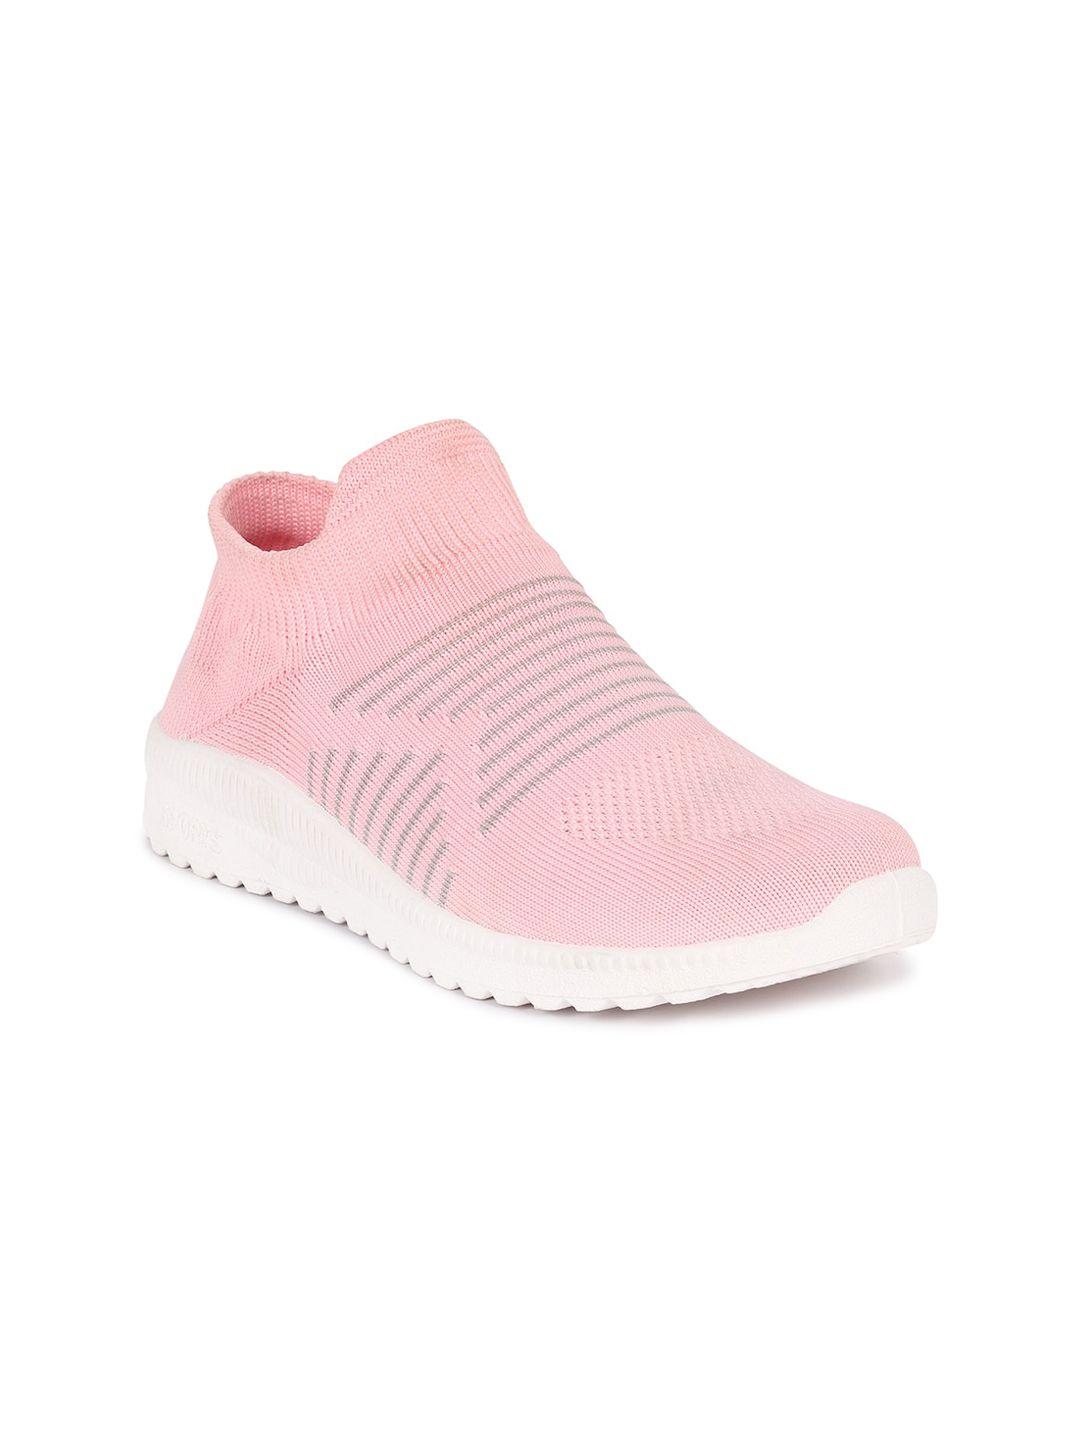 bella toes women pink woven design slip-on sneakers